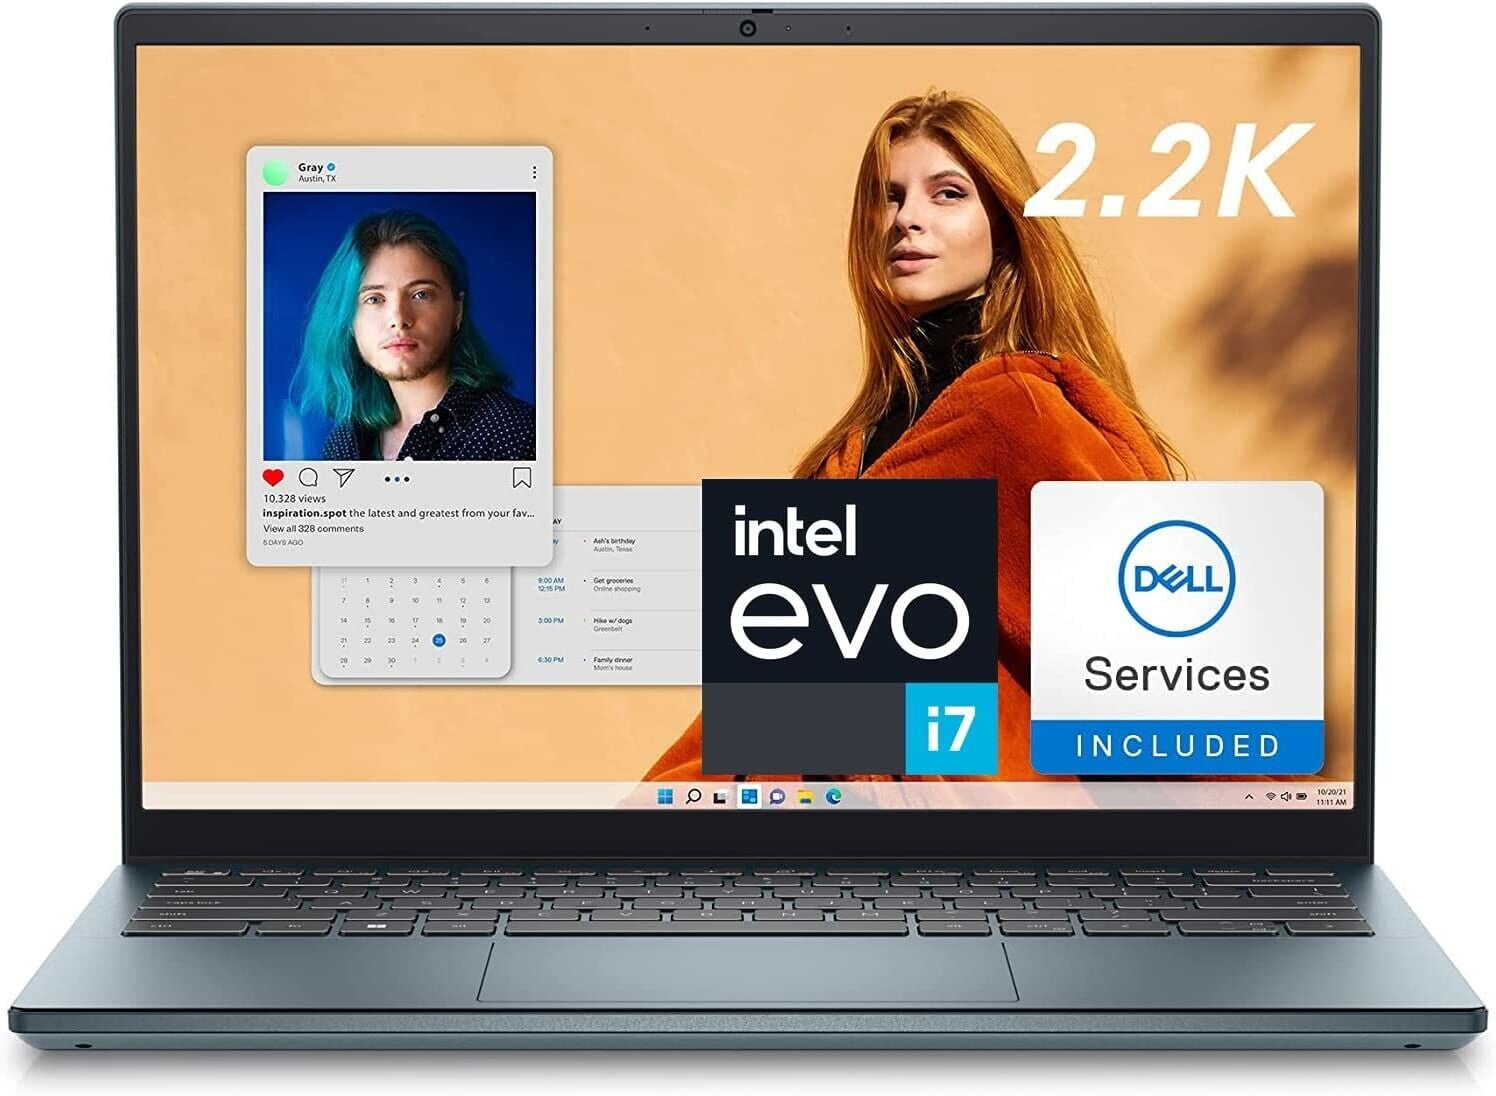 Dell Inspiron  Plus  Laptop    inch, 2.2K :, Intel